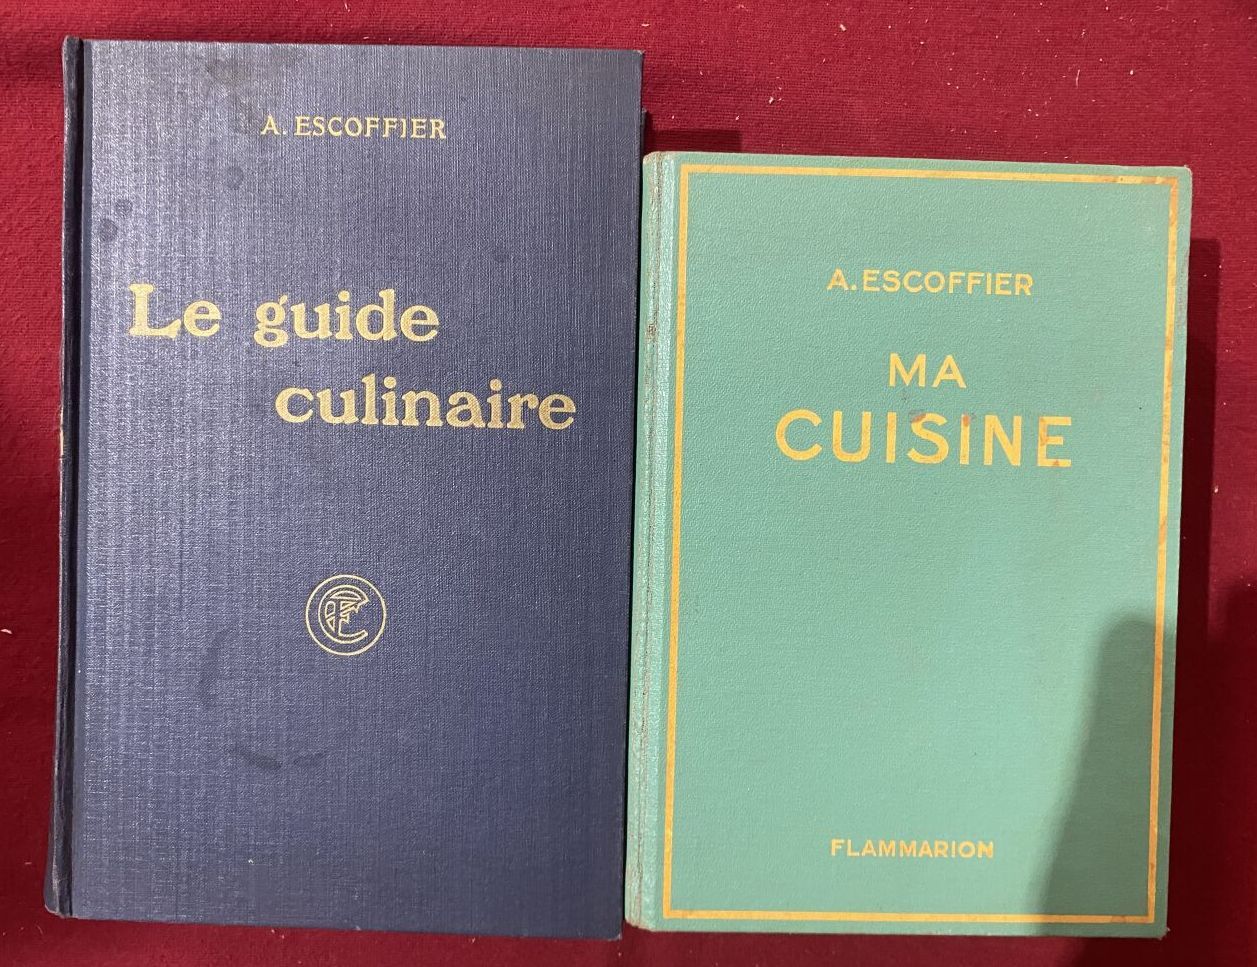 Null 奥古斯特-埃斯科菲尔。 
马家菜。2500道菜谱。 
巴黎，Flammarion，1934年，8开本，全纸板装订。
第一版。
 该书由同一作者加入，"&hellip;